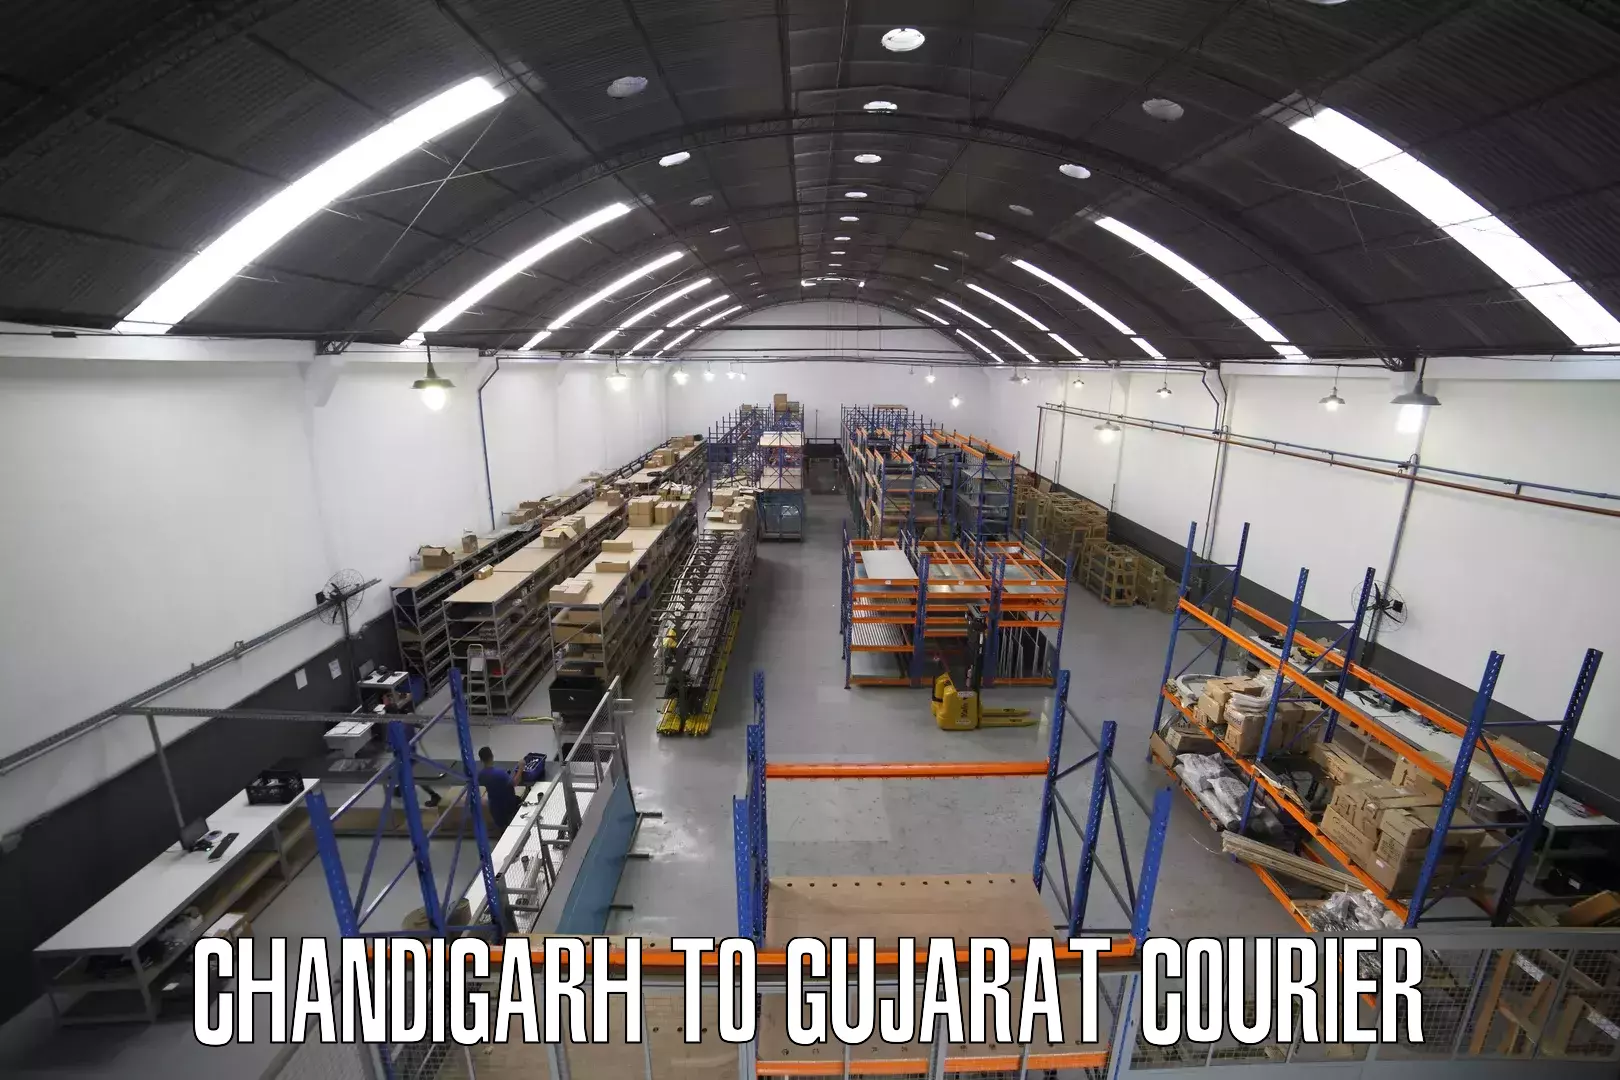 Advanced shipping network Chandigarh to GIDC